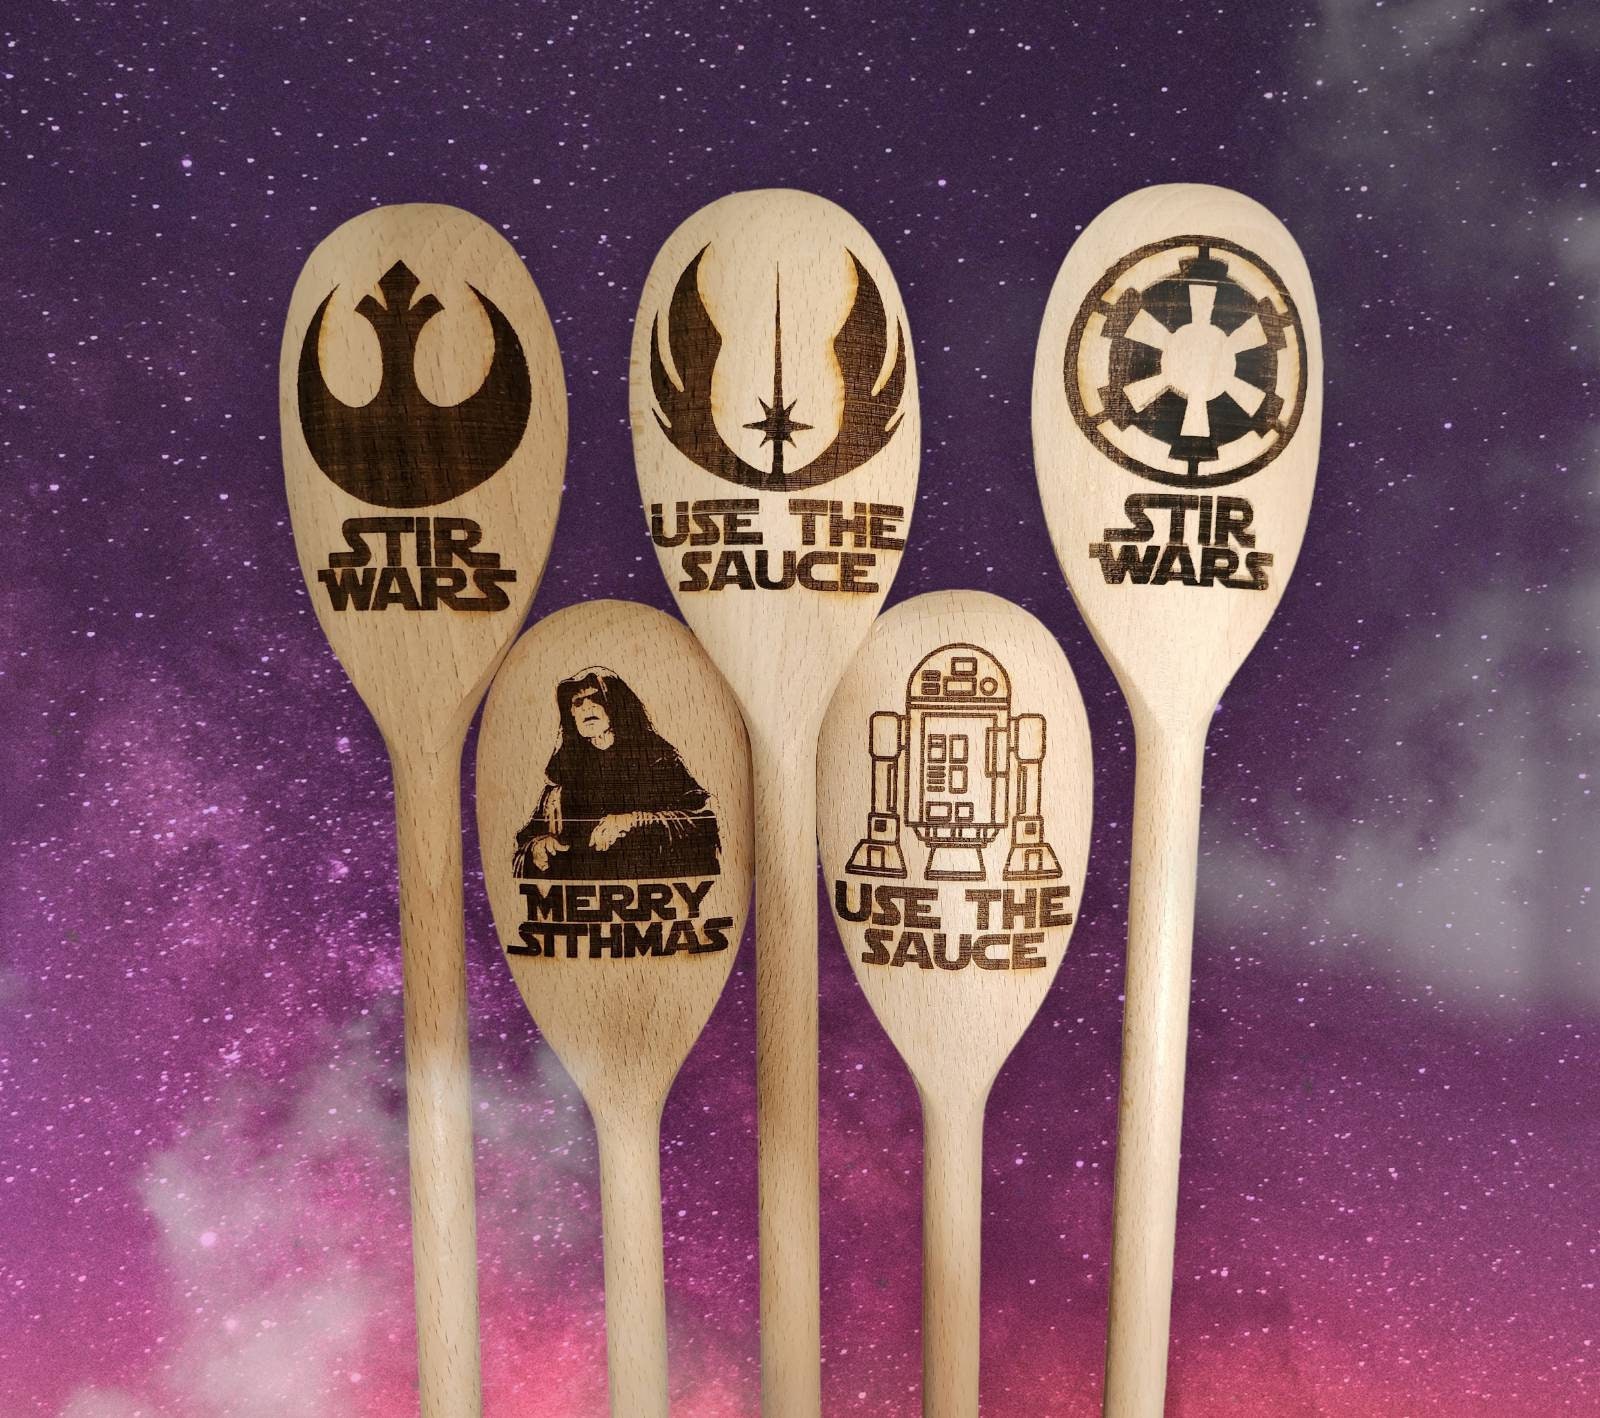 Star Wars Wooden Spoons Set of 5,Starwars Burned Kitchen Utensils  Set,Bamboo Cooking Utensils for Star Wars Kitchen Decor,Star Wars Gifts for